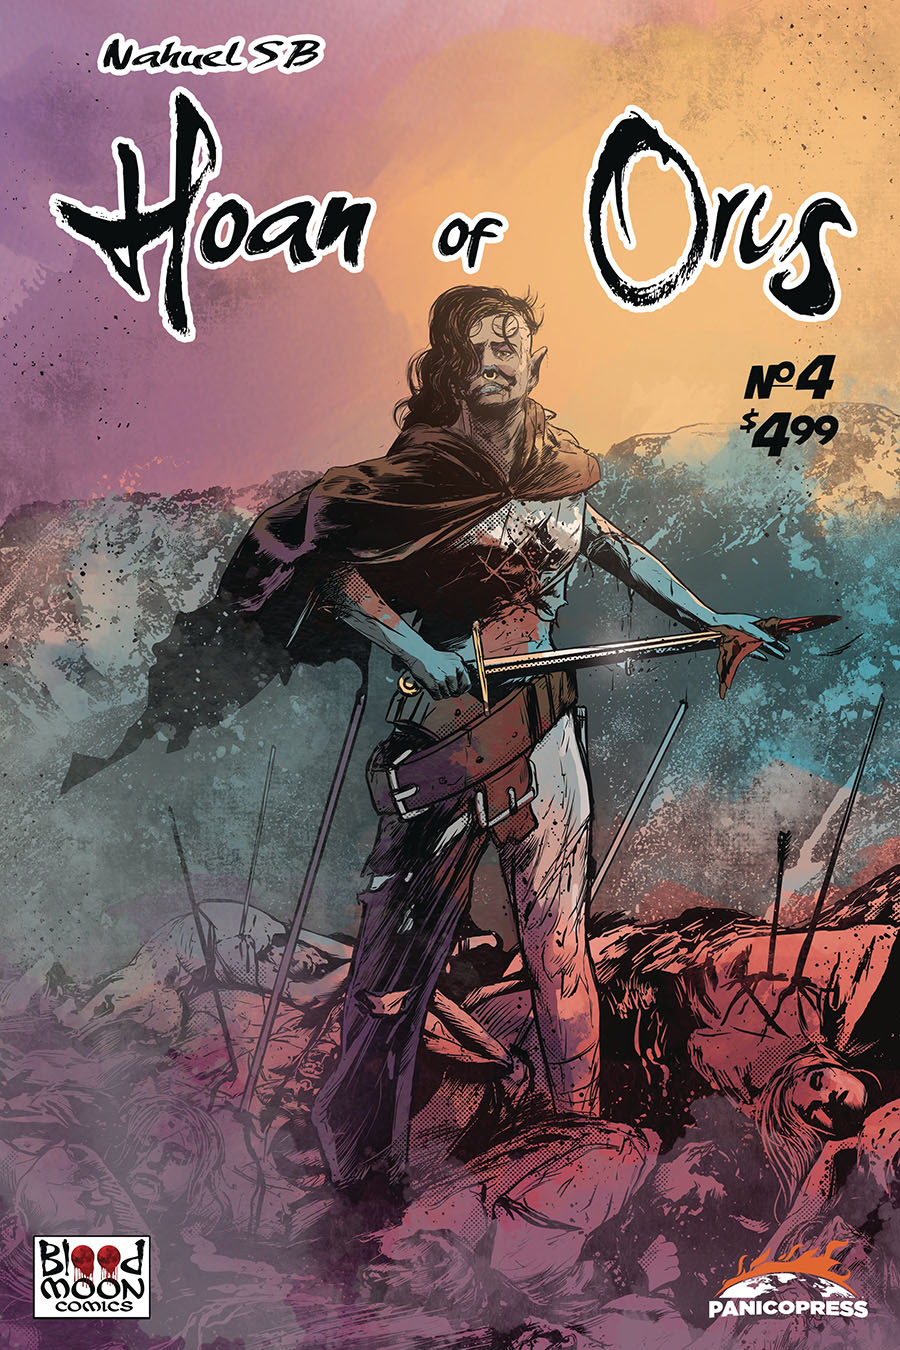 Hoan Of Orcs #4 Cover B Variant Herman Gonzalez & Nahuel SB Cover